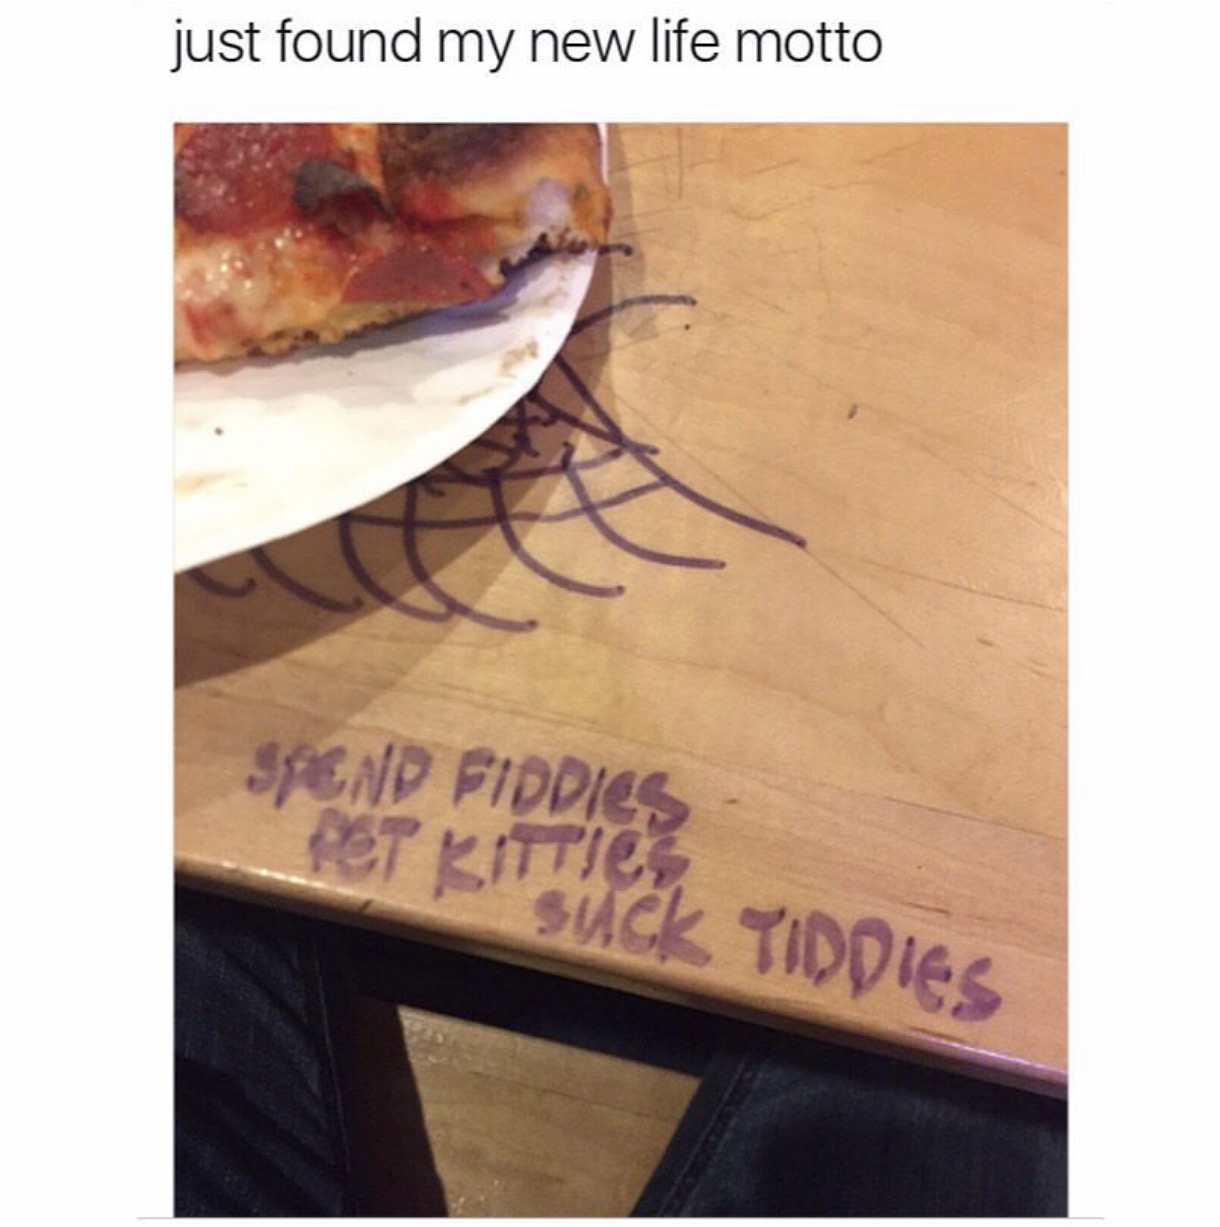 life motto meme - just found my new life motto Spcad Fiddies "Rot Kituck Tiddies